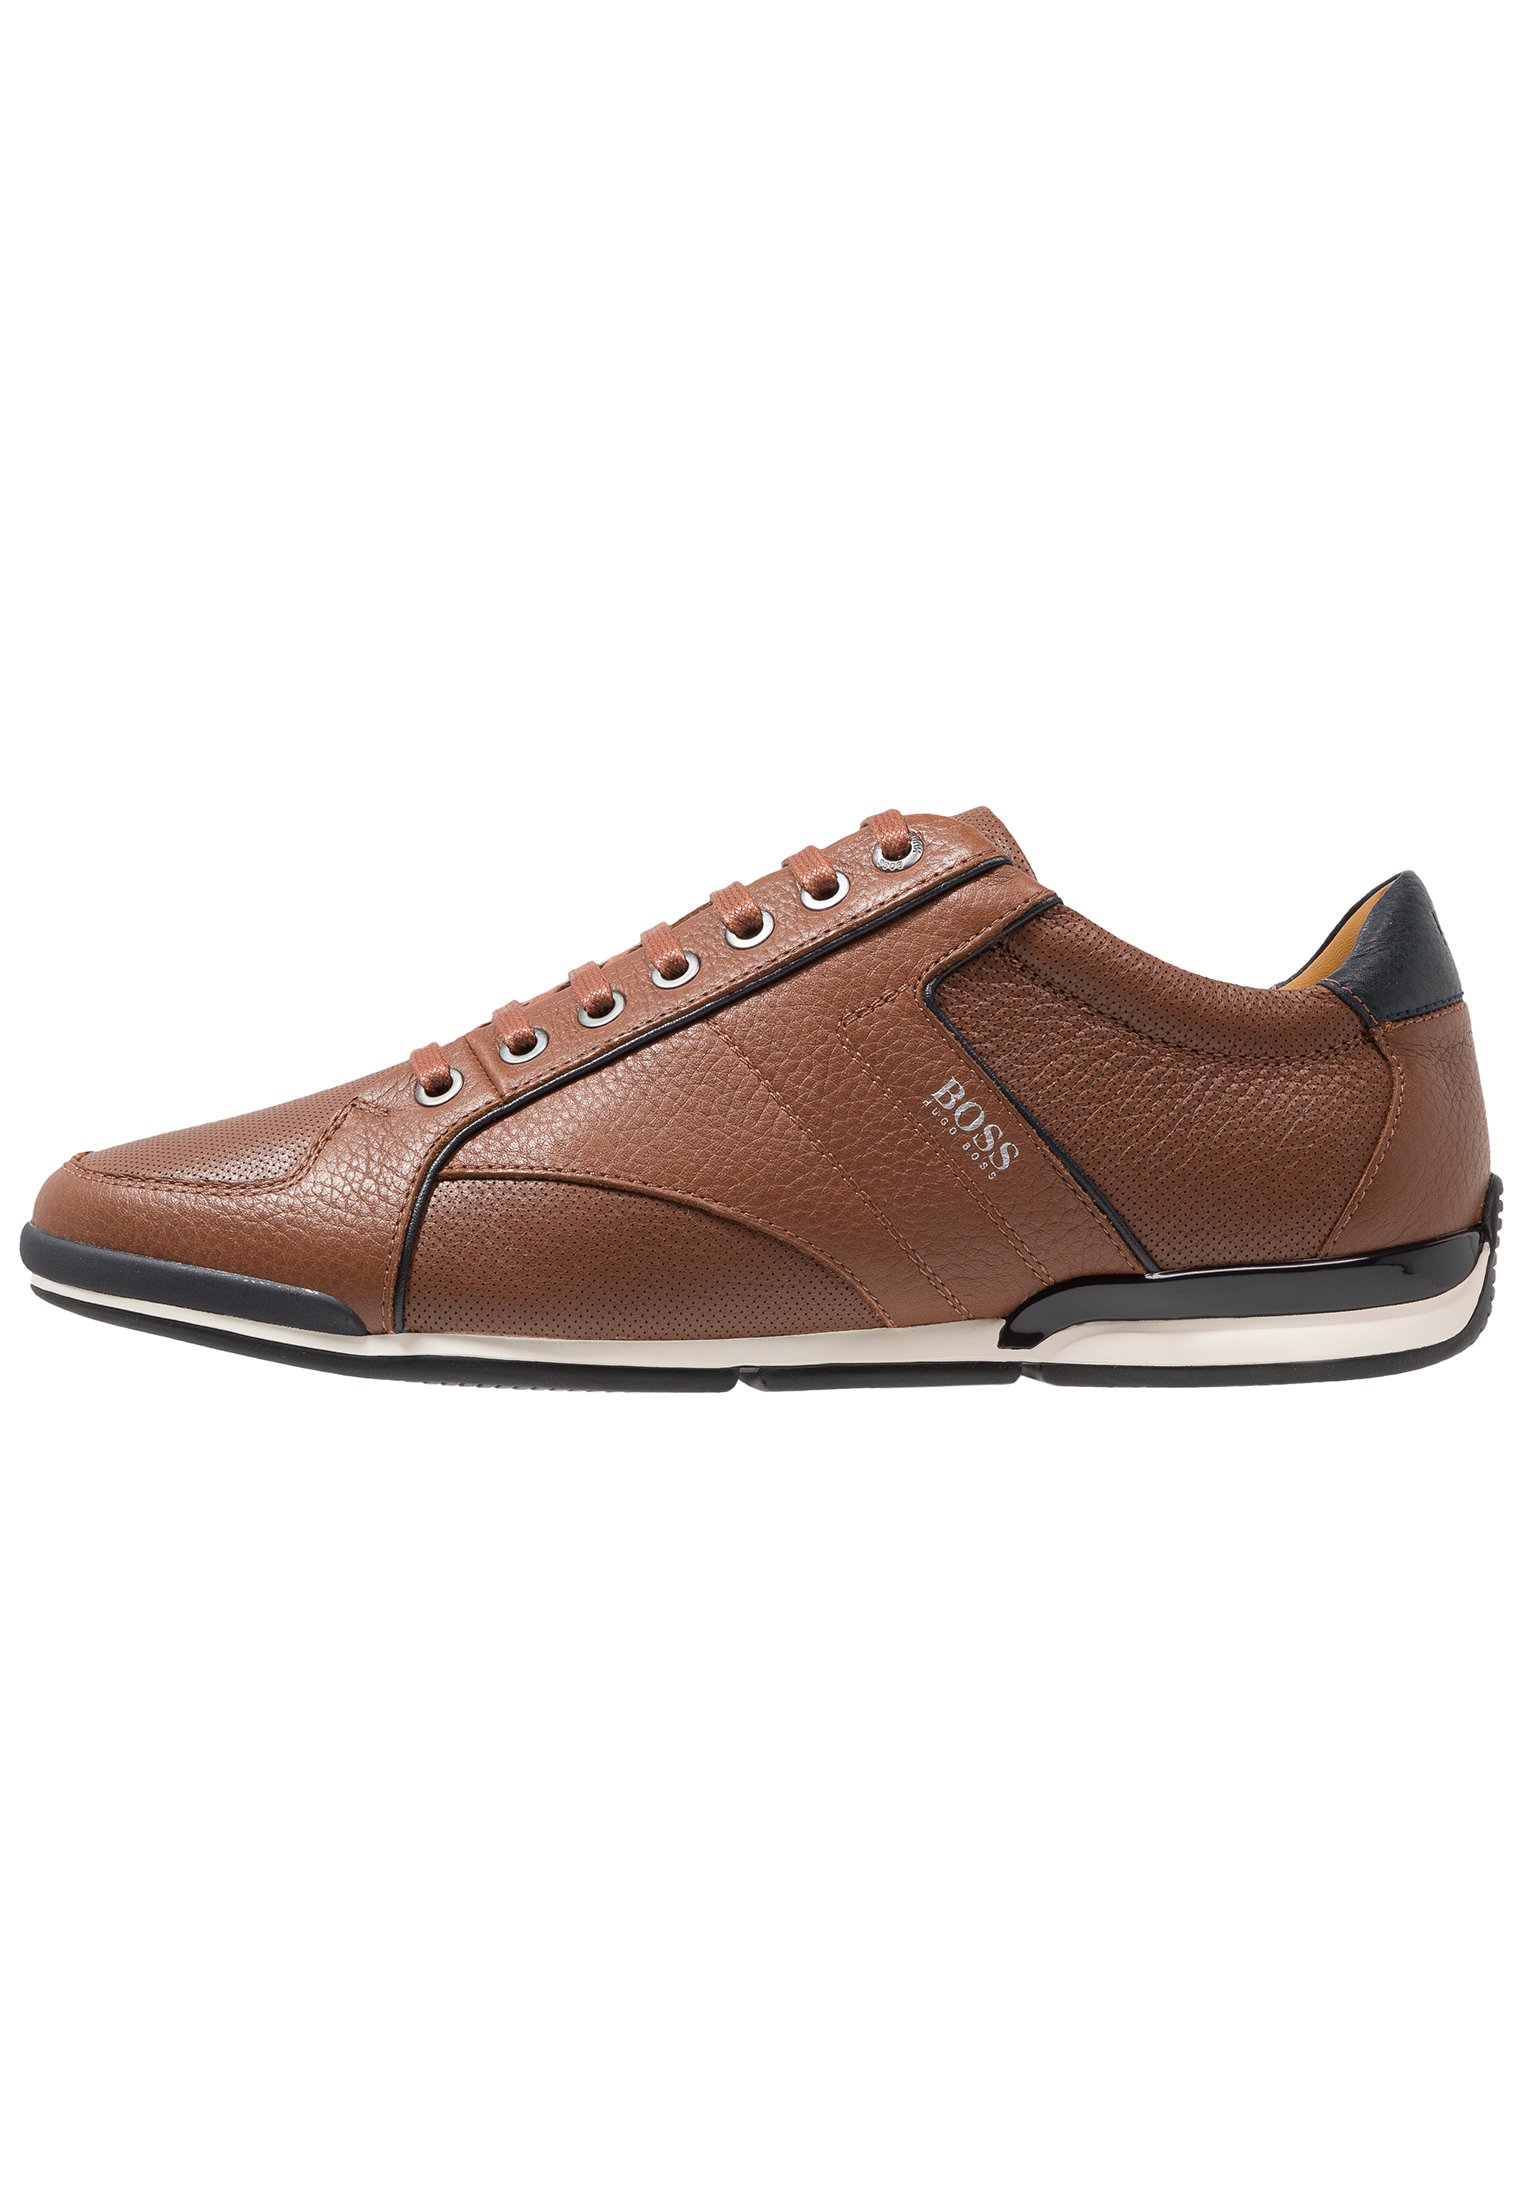 BOSS SATURN - Sneaker low - medium brown/braun